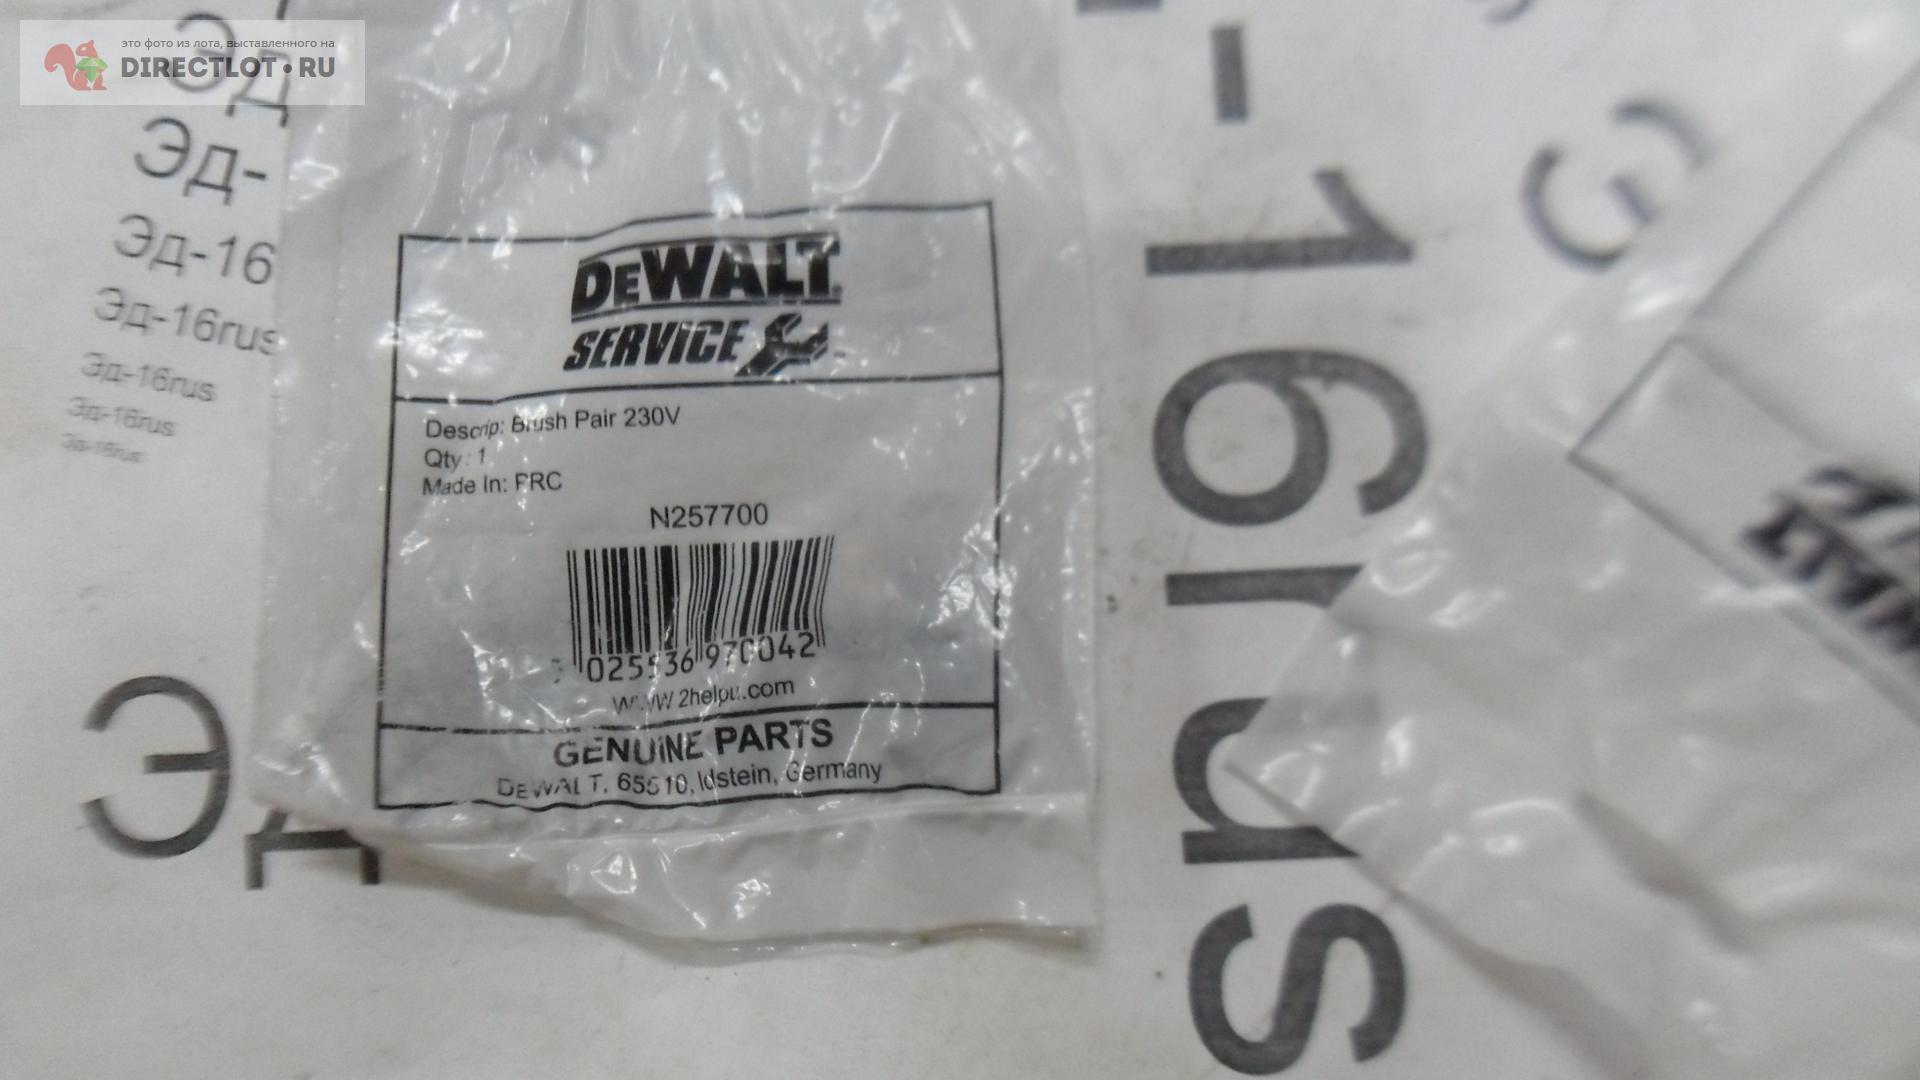 Комплект щеток DeWALT N257700  в Набережных Челнах цена 300 Р на .